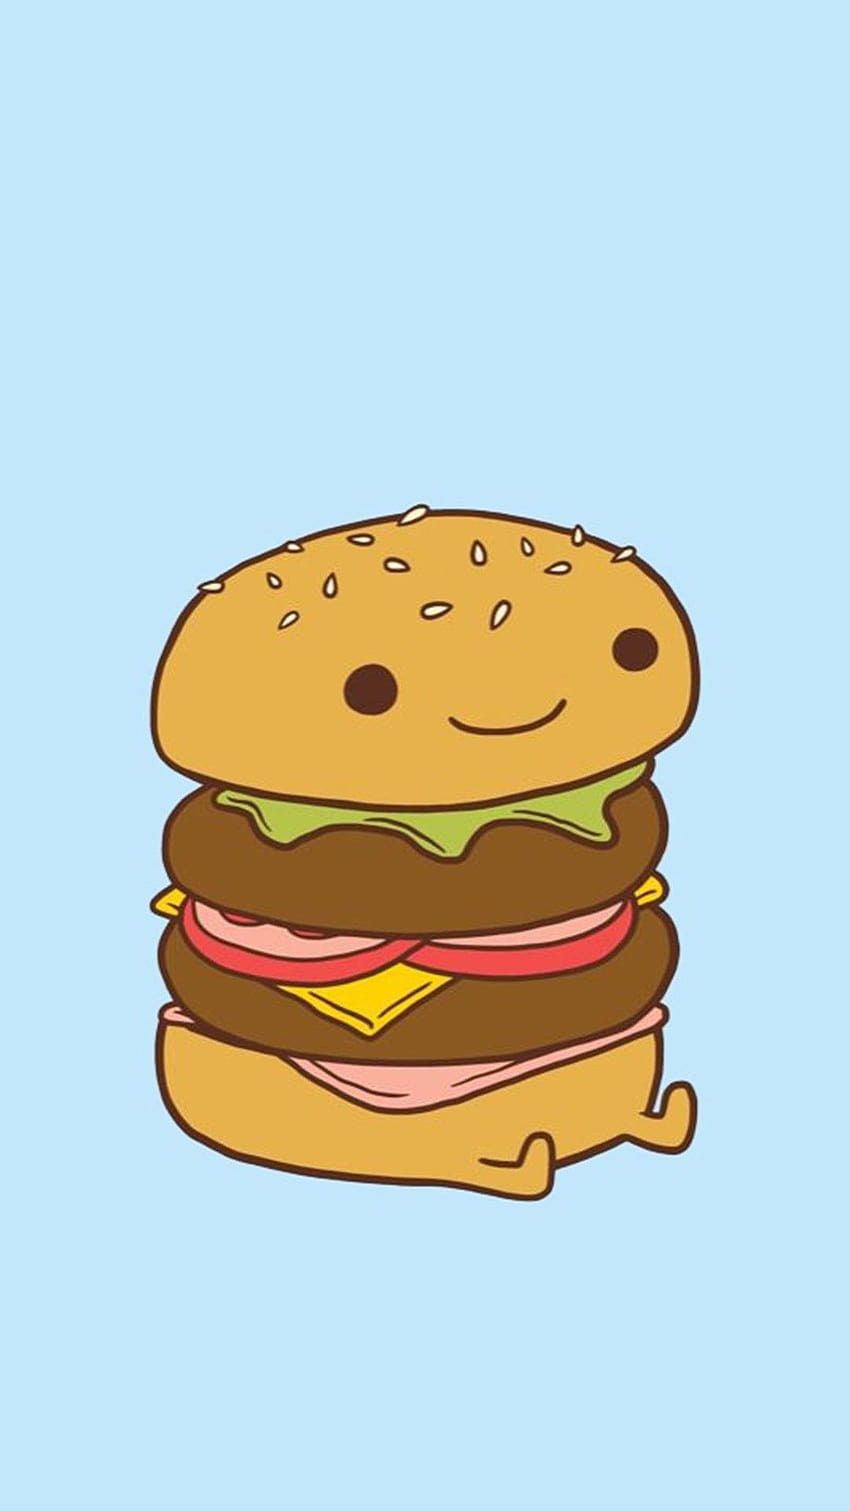 Anime Food _ Fried alfonsino w/ sweetspicy sauce & camembert Cheese Burger,  lunch @KinmeBurger | Food sketch, Food, Cute food art